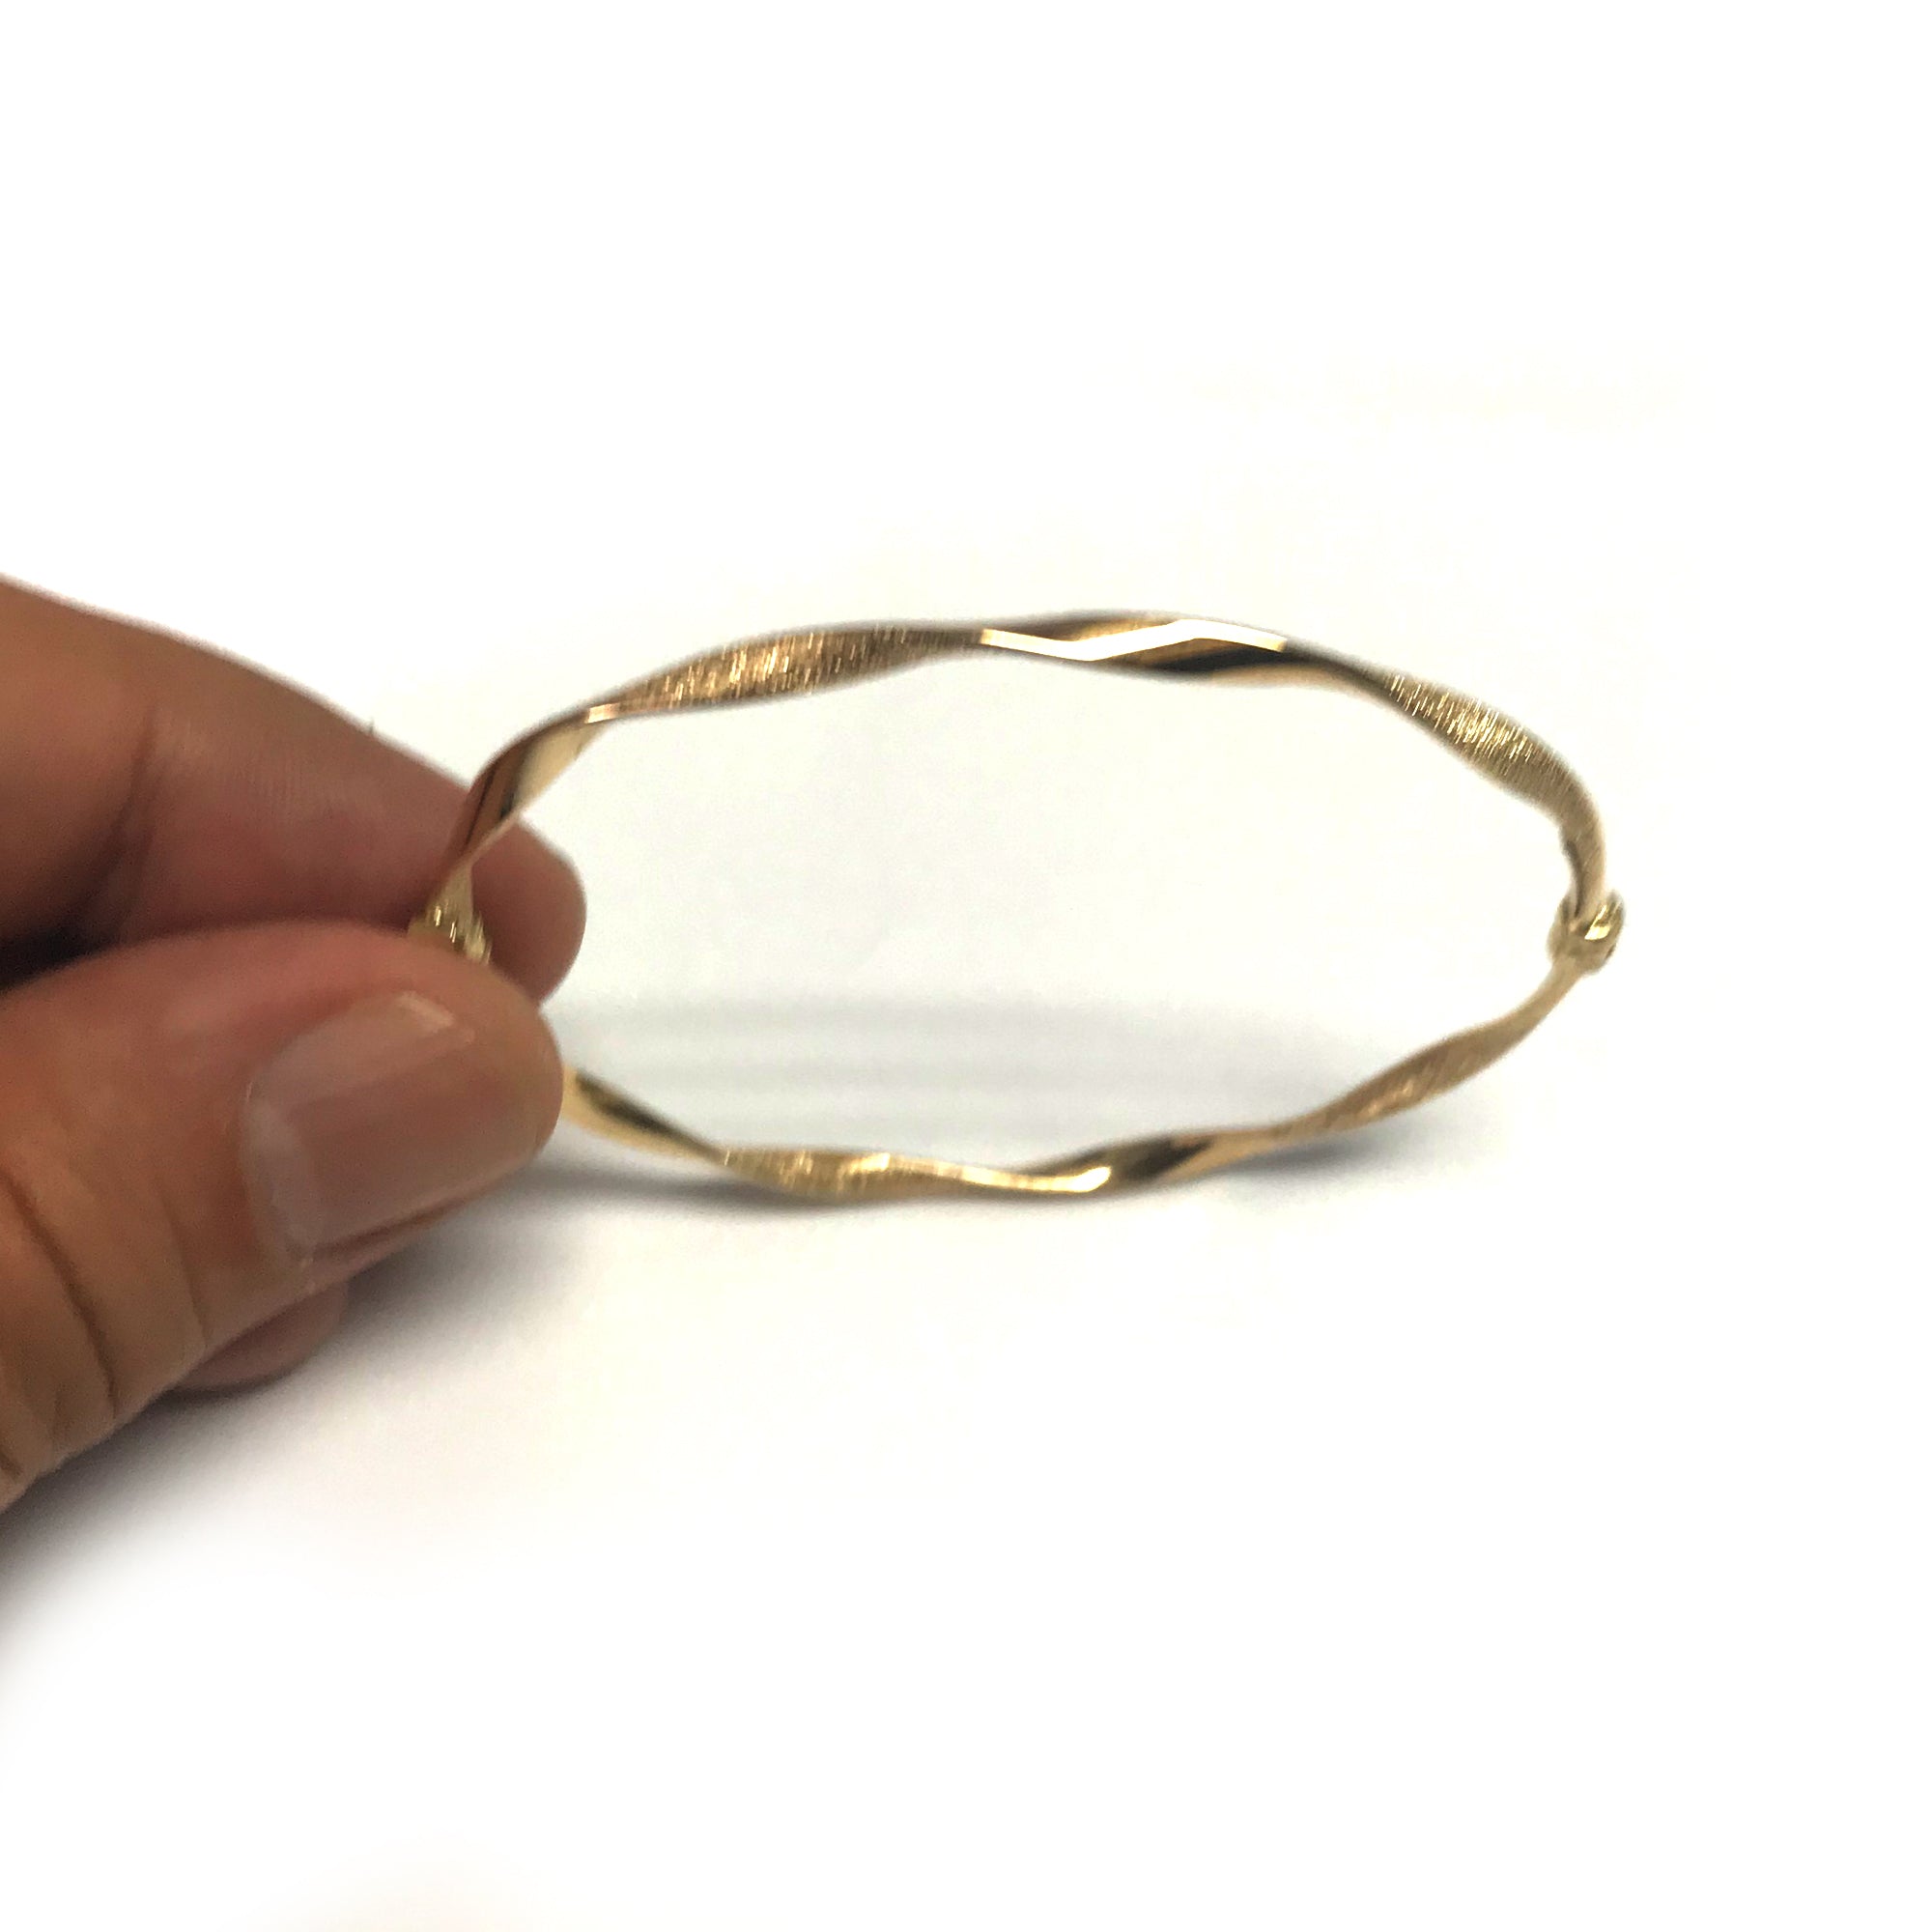 10k Yellow Gold Twisted Women's Bangle Bracelet, 7.75" fine designer jewelry for men and women